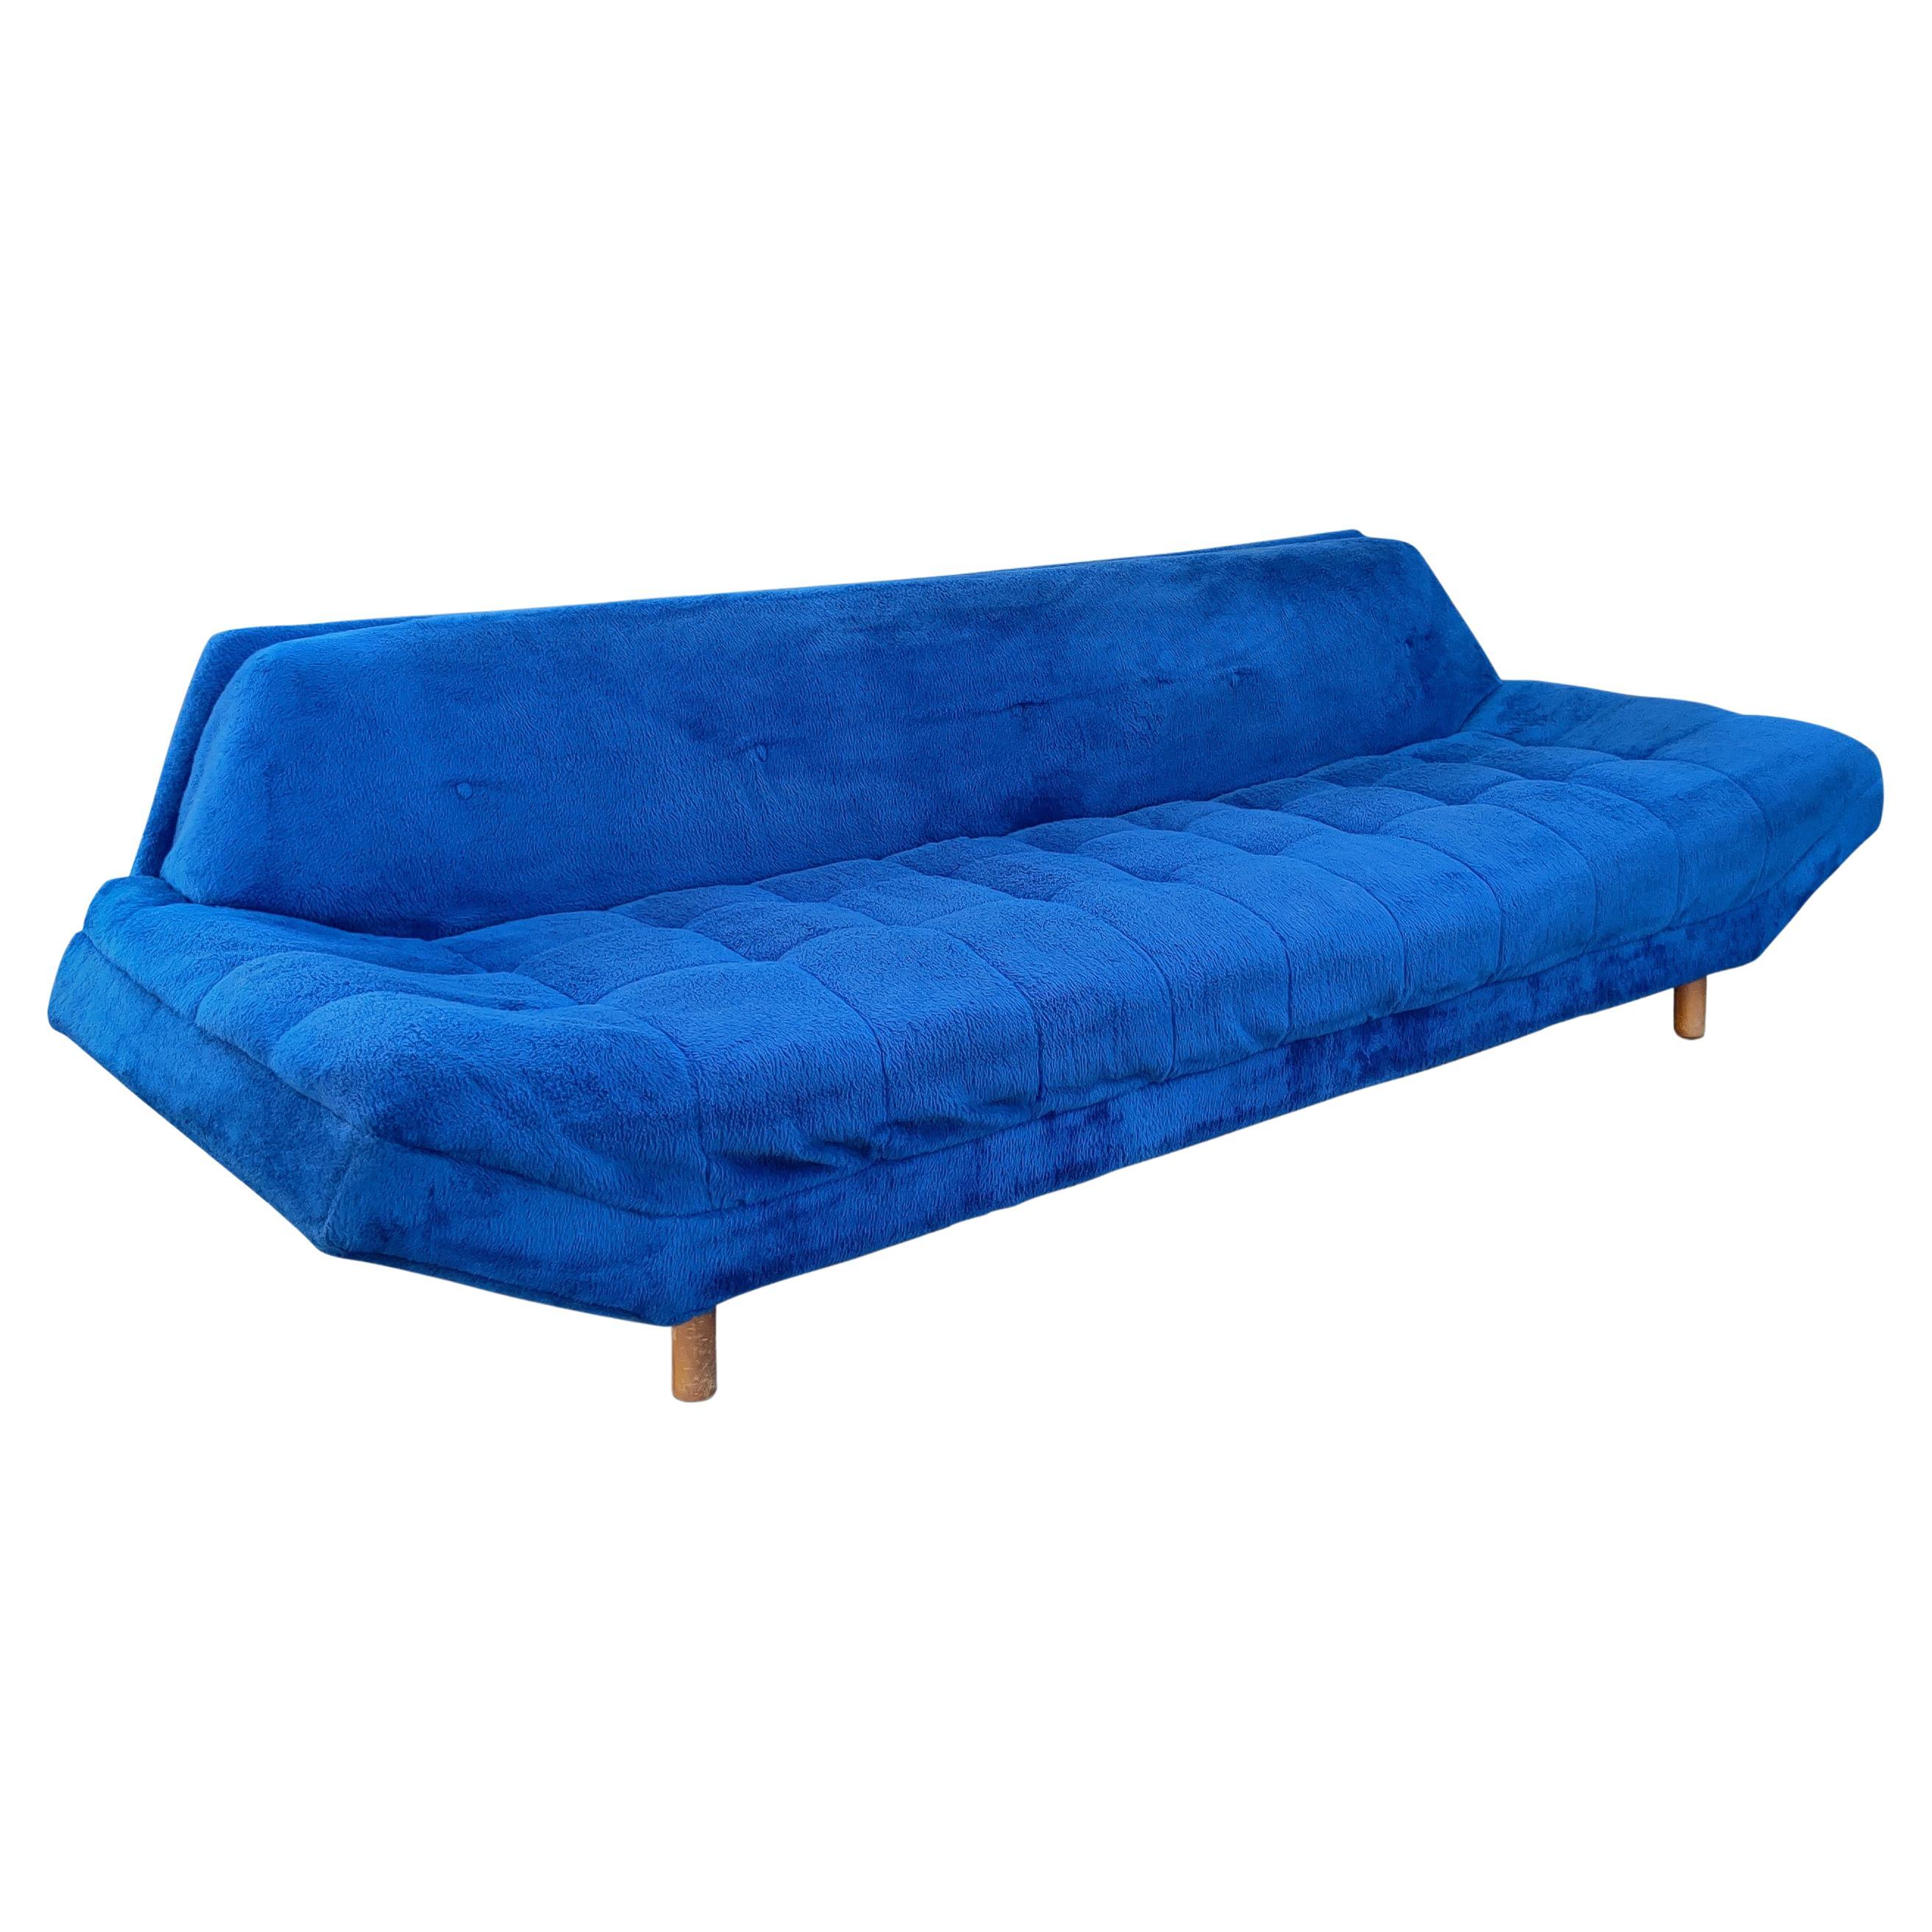 Blue Adrian Pearsall Style Tufted Gondola Sofa Walnut Mid-Century Modern